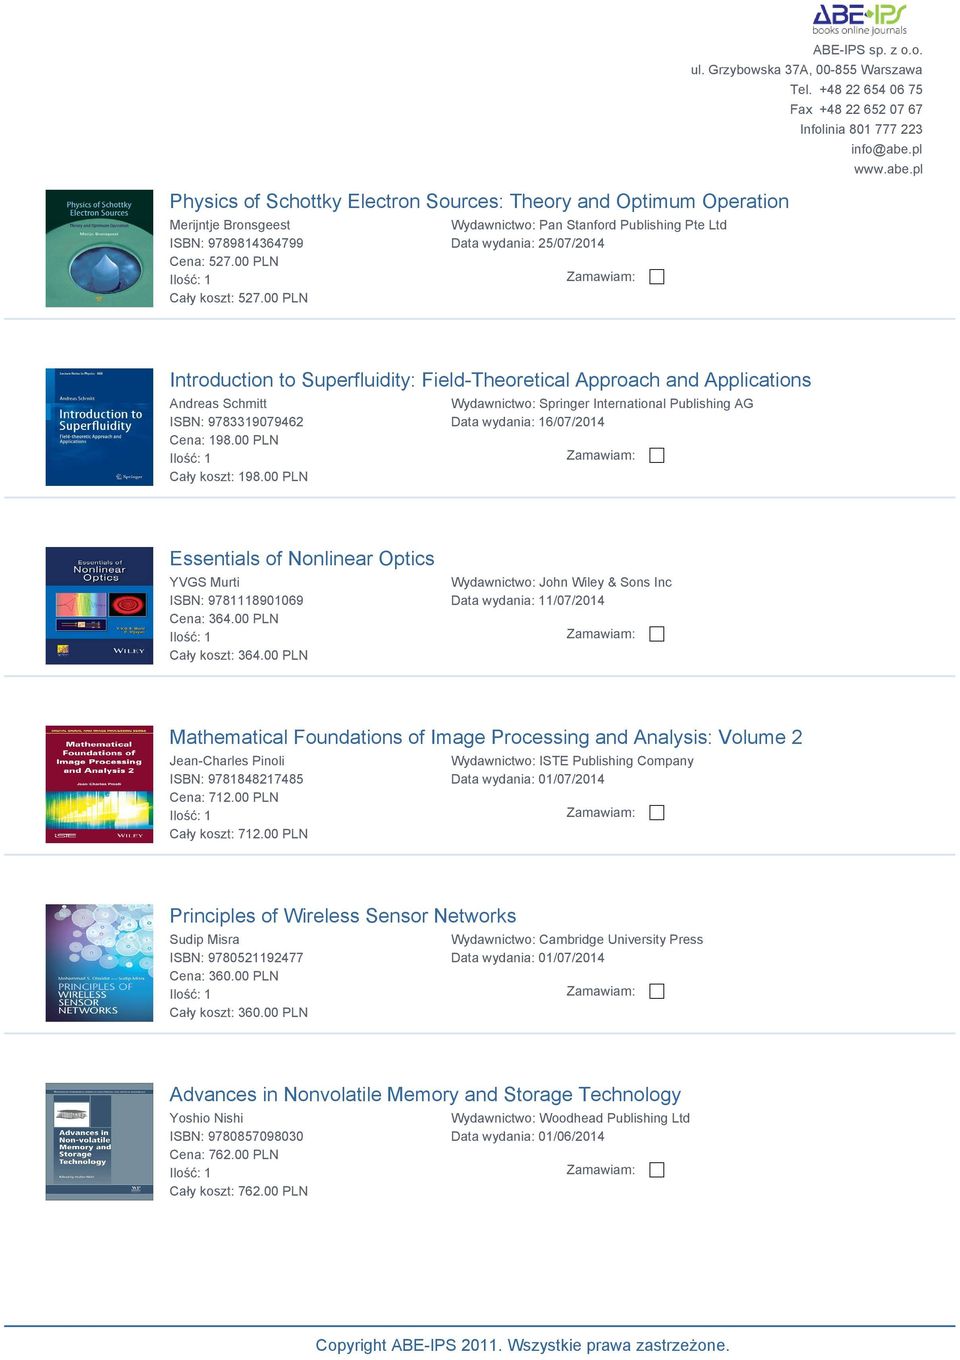 00 PLN Cały koszt: 198.00 PLN Wydawnictwo: Springer International Publishing AG Data wydania: 16/07/2014 Essentials of Nonlinear Optics YVGS Murti ISBN: 9781118901069 Cena: 364.00 PLN Cały koszt: 364.